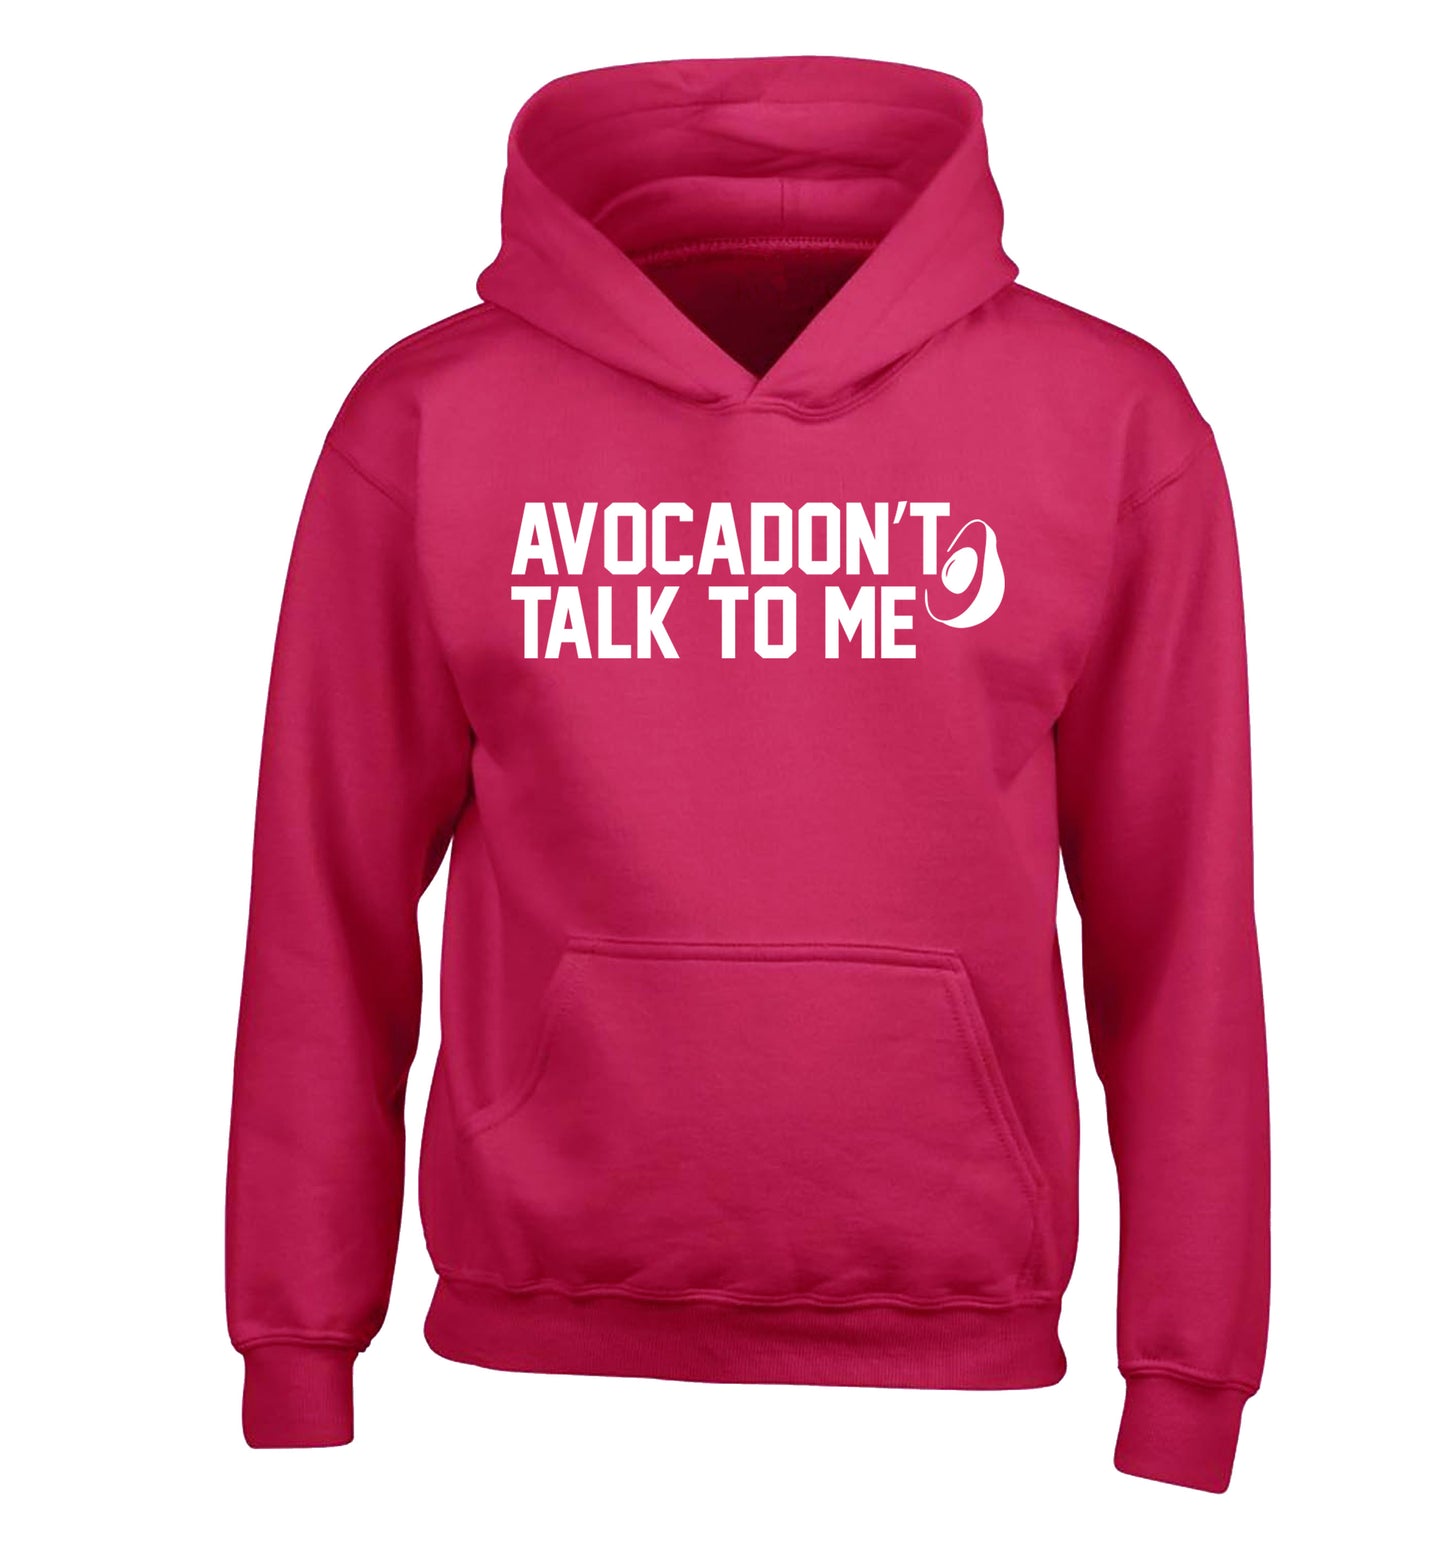 Avocadon't talk to me children's pink hoodie 12-14 Years